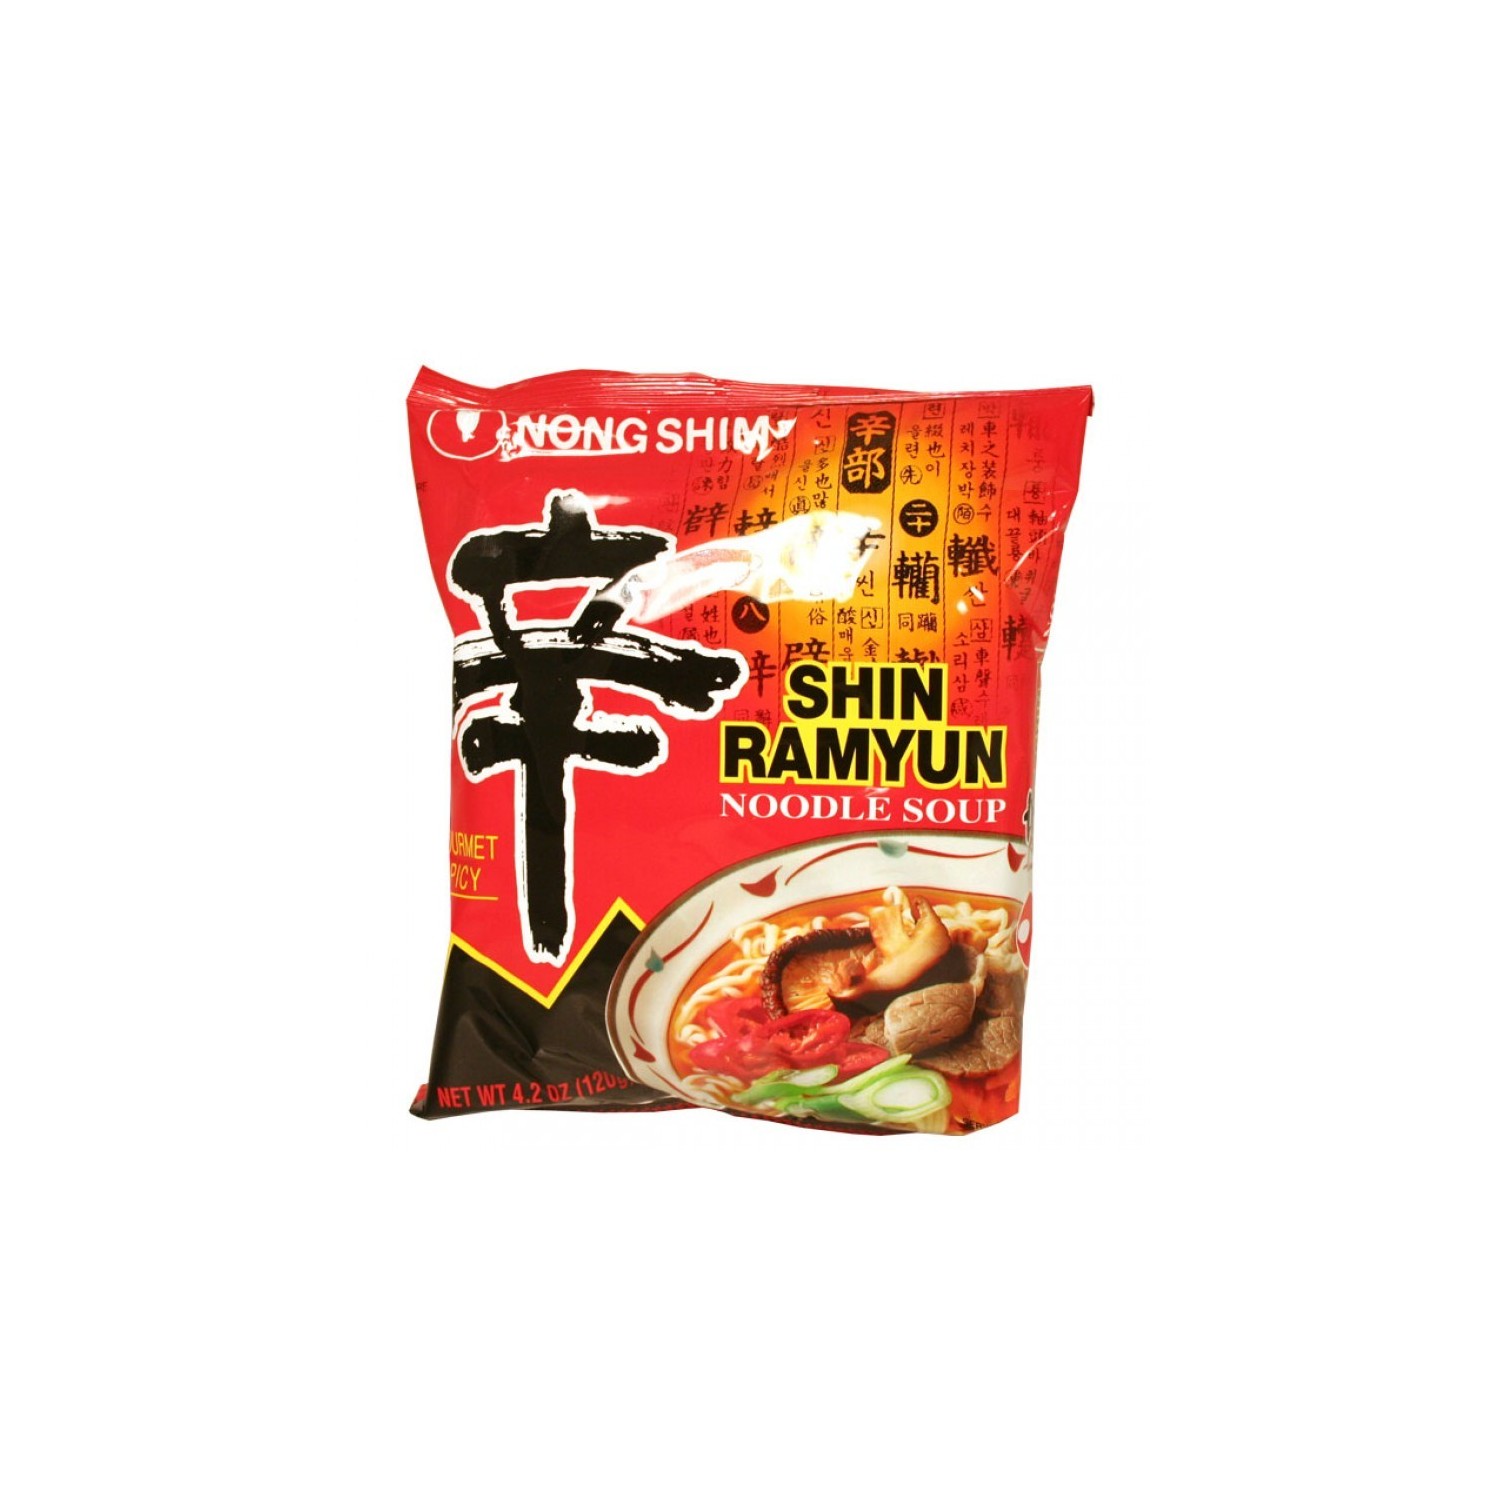 Nongshim Shin Ramyun Noodle 120g 農心 辛辣面 Hot Spicy Noodles